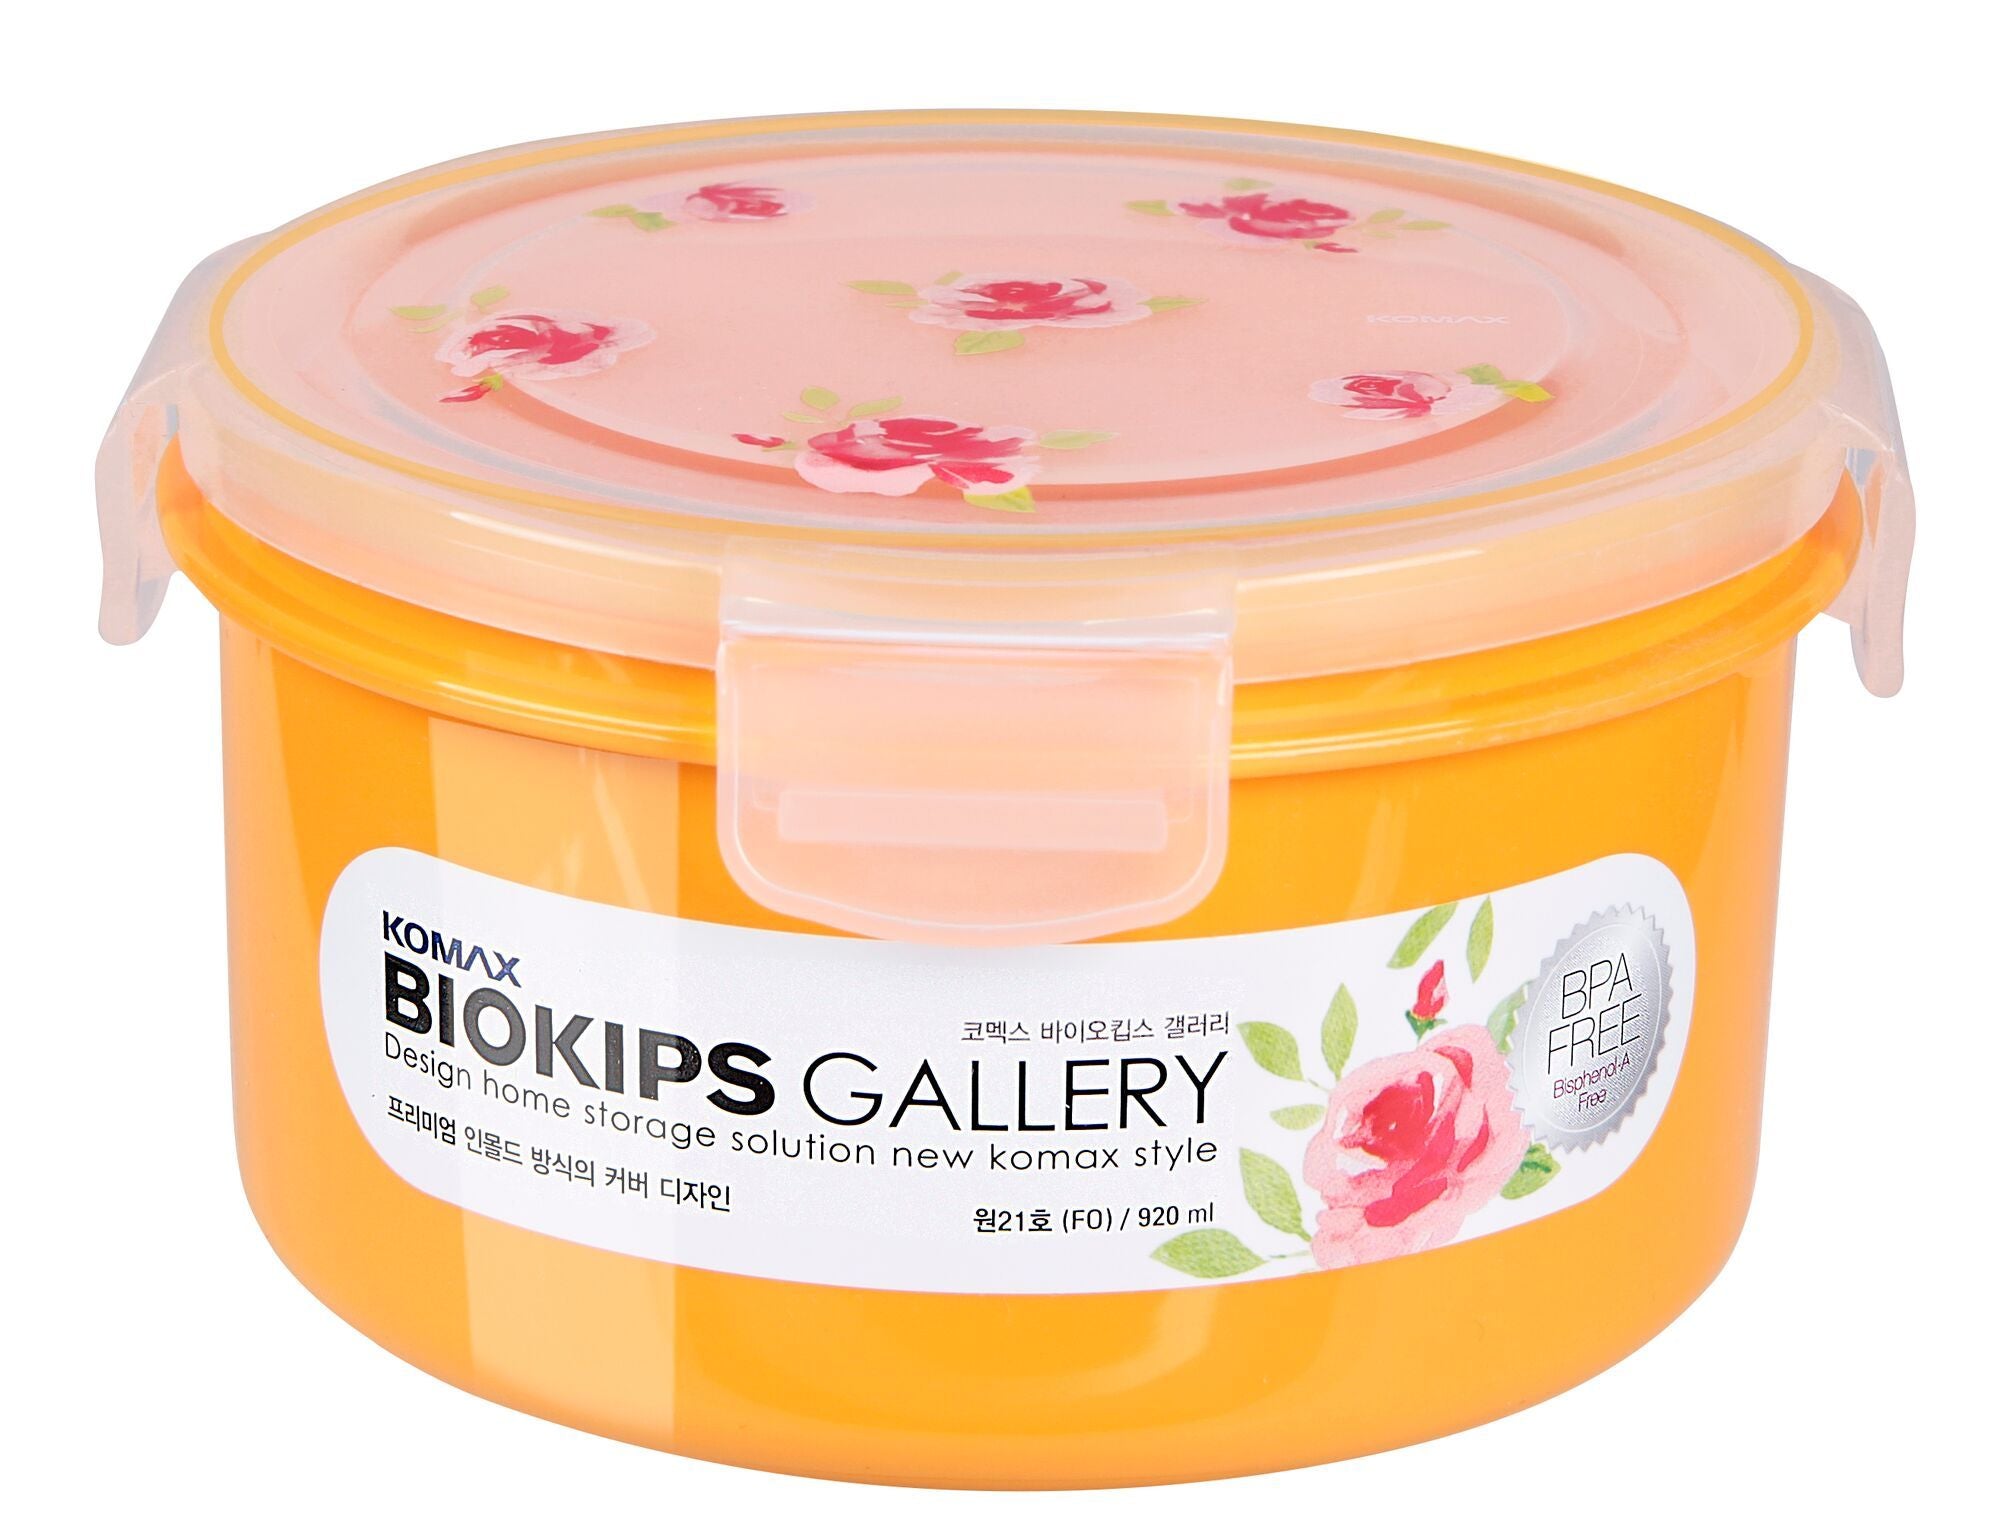 Komax Biokips Gallery I Round Food Storage Container, 920 ml